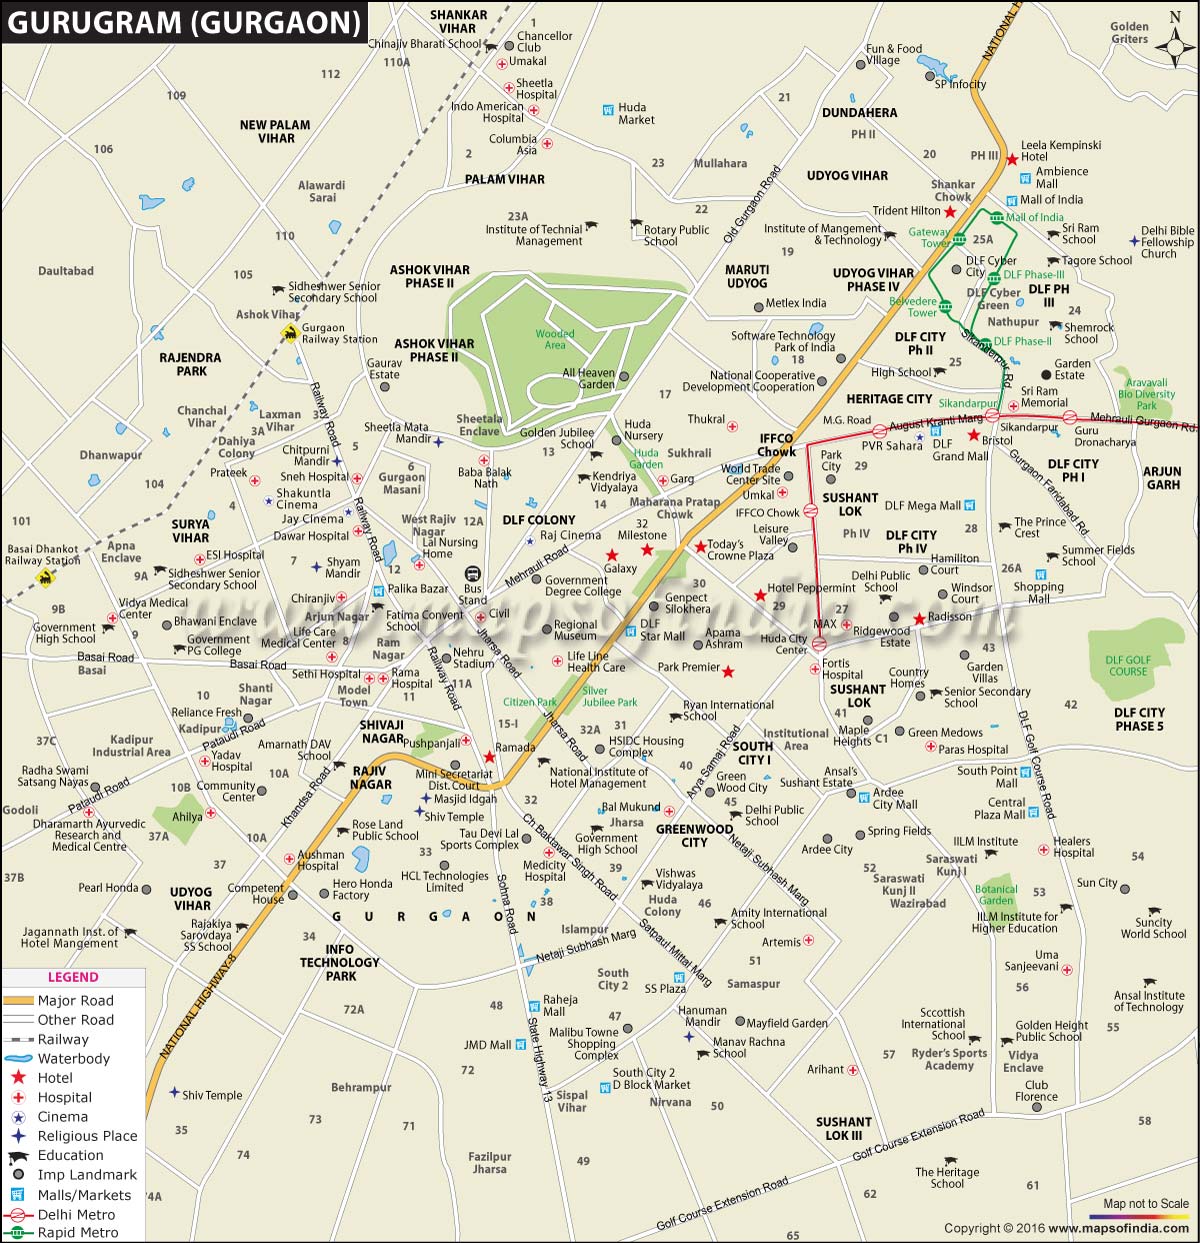 Travel Map of Gurgaon